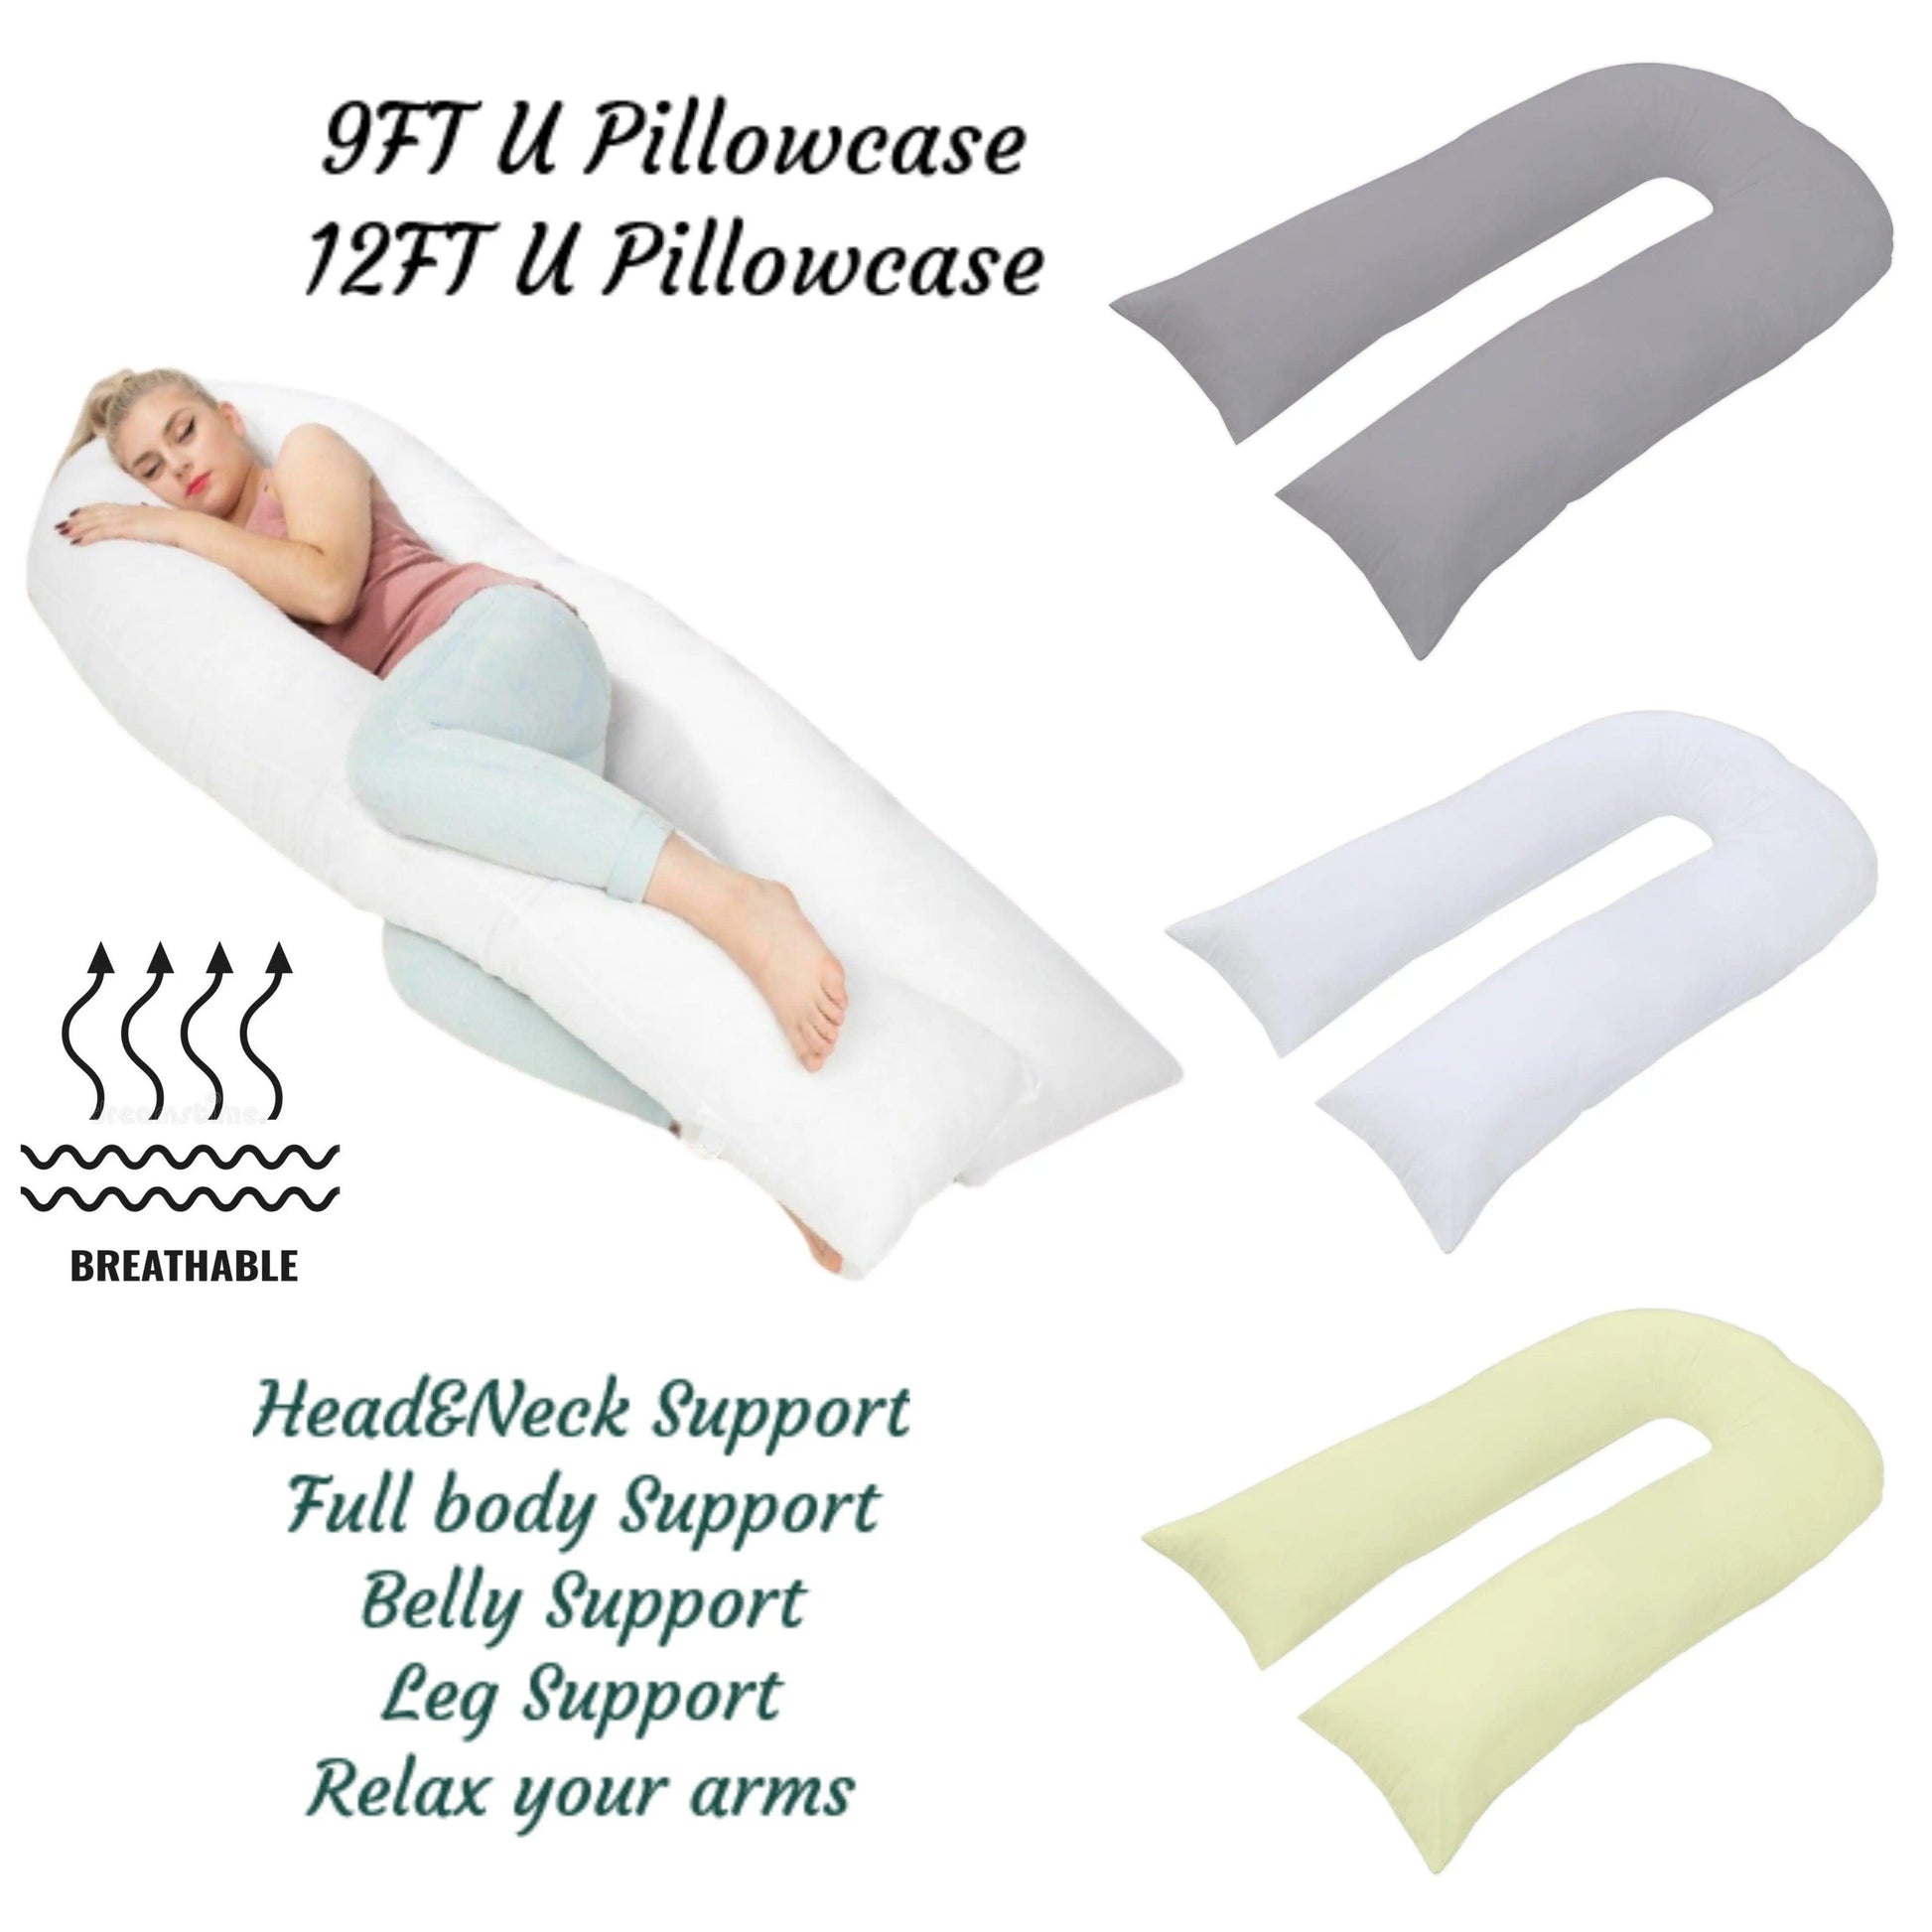 9Ft12Ft U Pillowcase